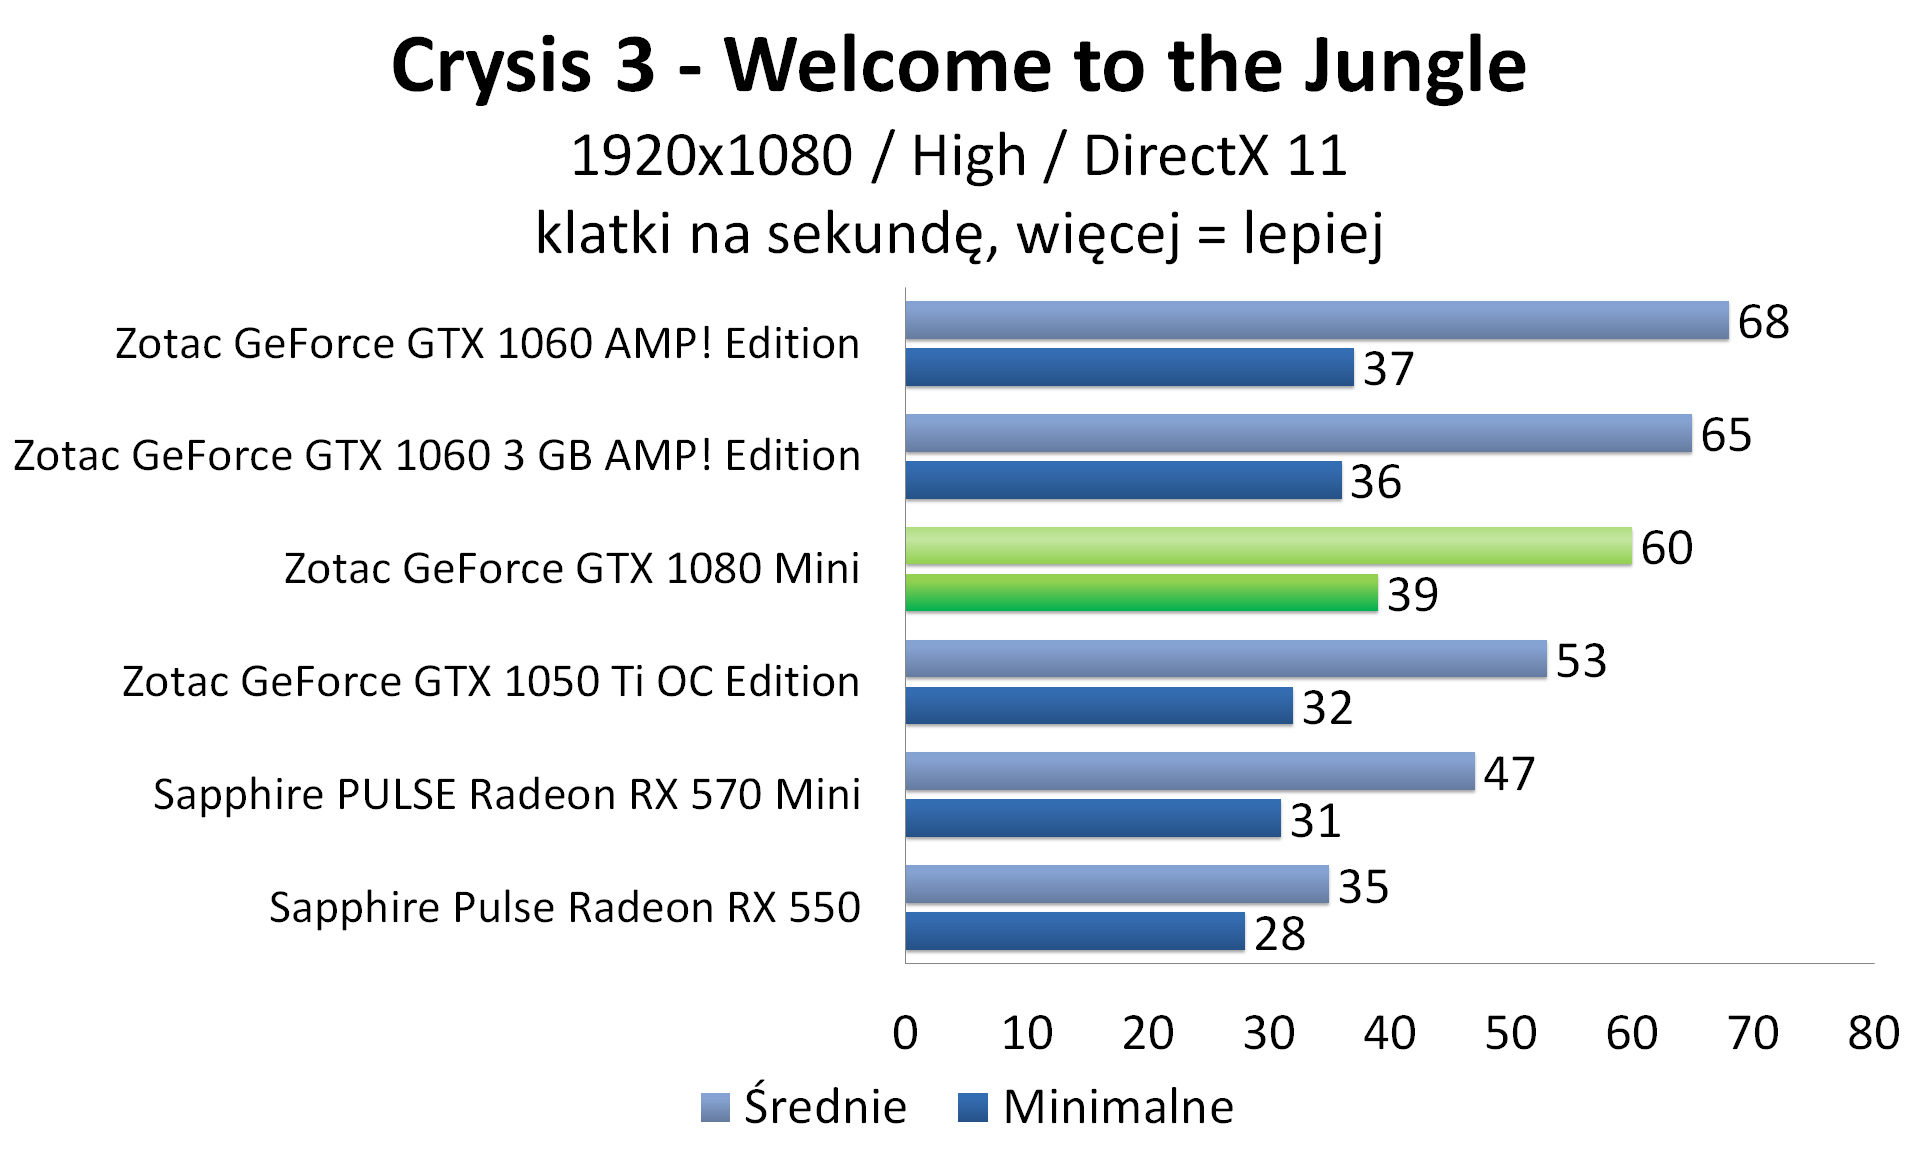 Zotac GeForce GTX 1080 Mini - Crysis 3